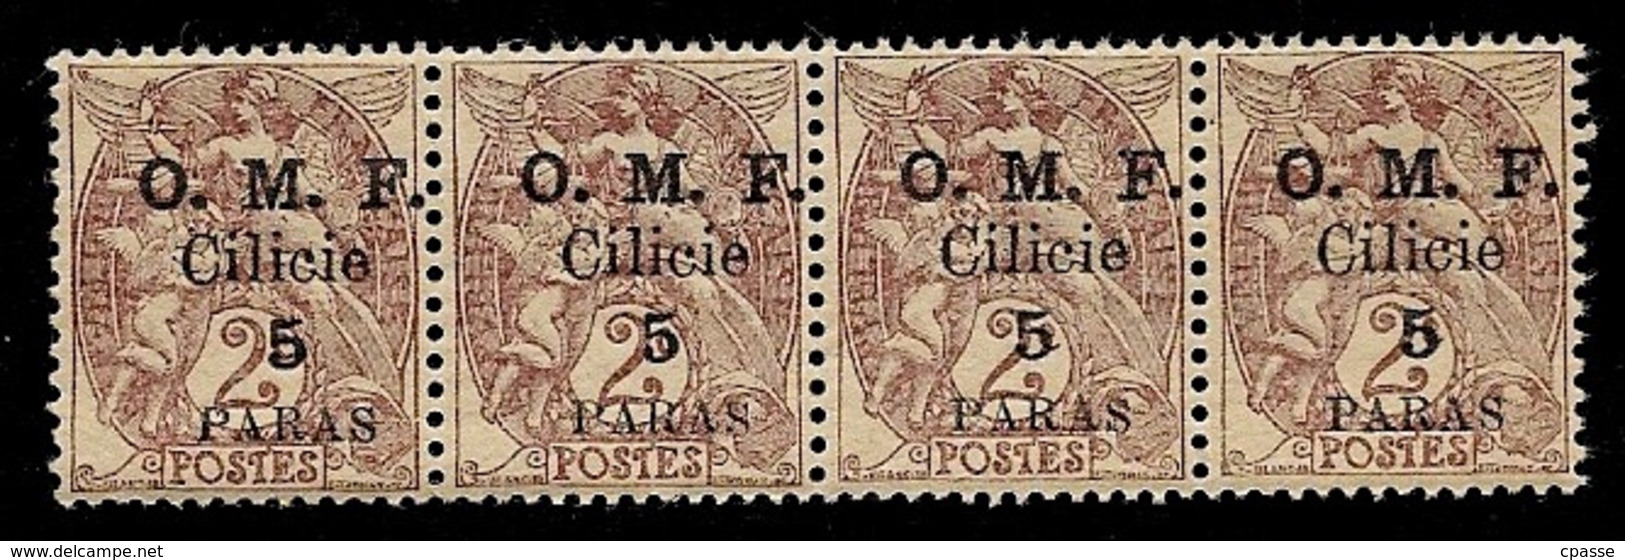 (Bande De 4) Timbre Type Blanc O.M.F. Cilicie 5 PARAS - Unused Stamps